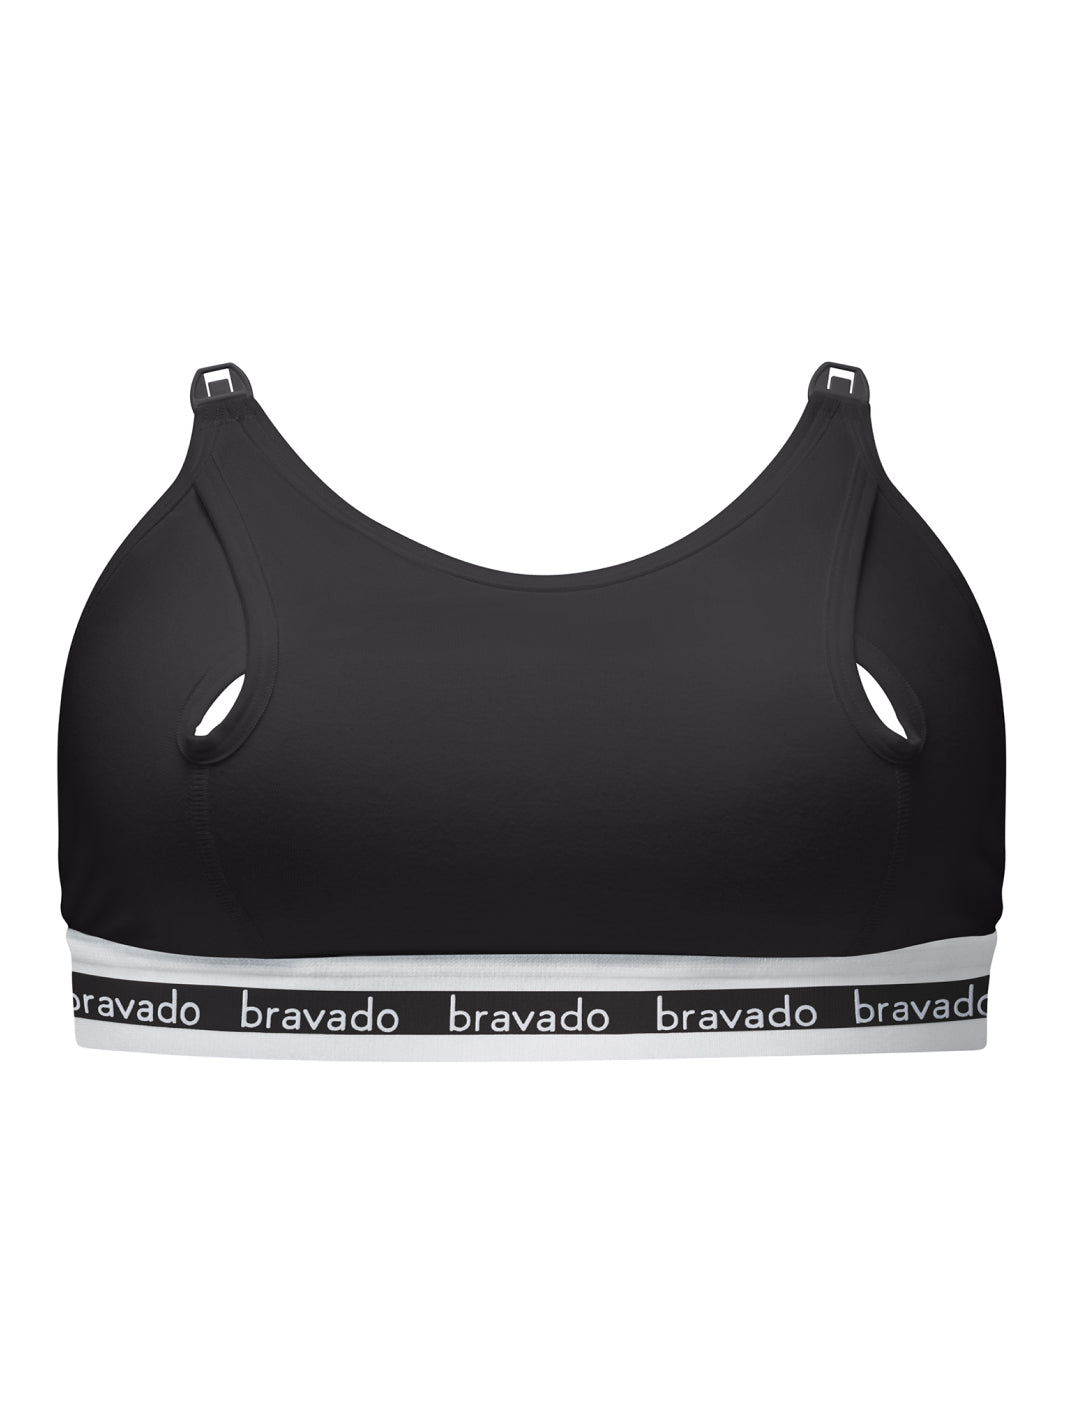 Bravado Designs - Clip and Pump Hands-Free Nursing Bra Accessory - Black,  Large